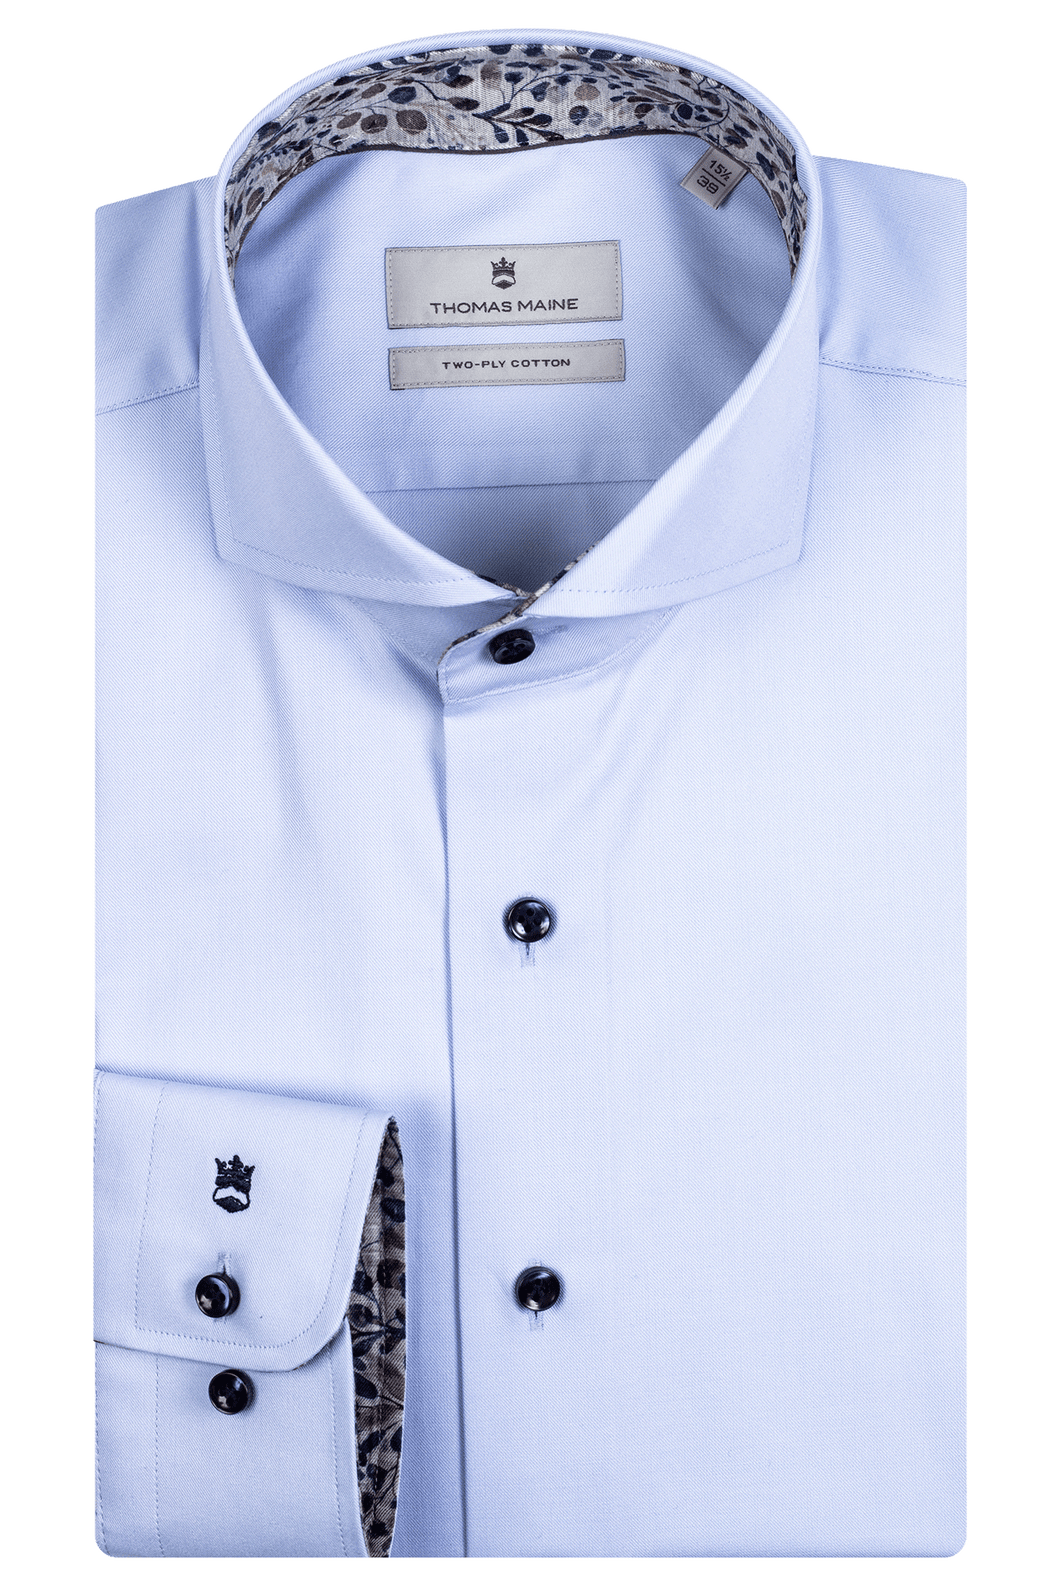 THOMAS MAINE Light Blue Shirt with Contrast Print Details